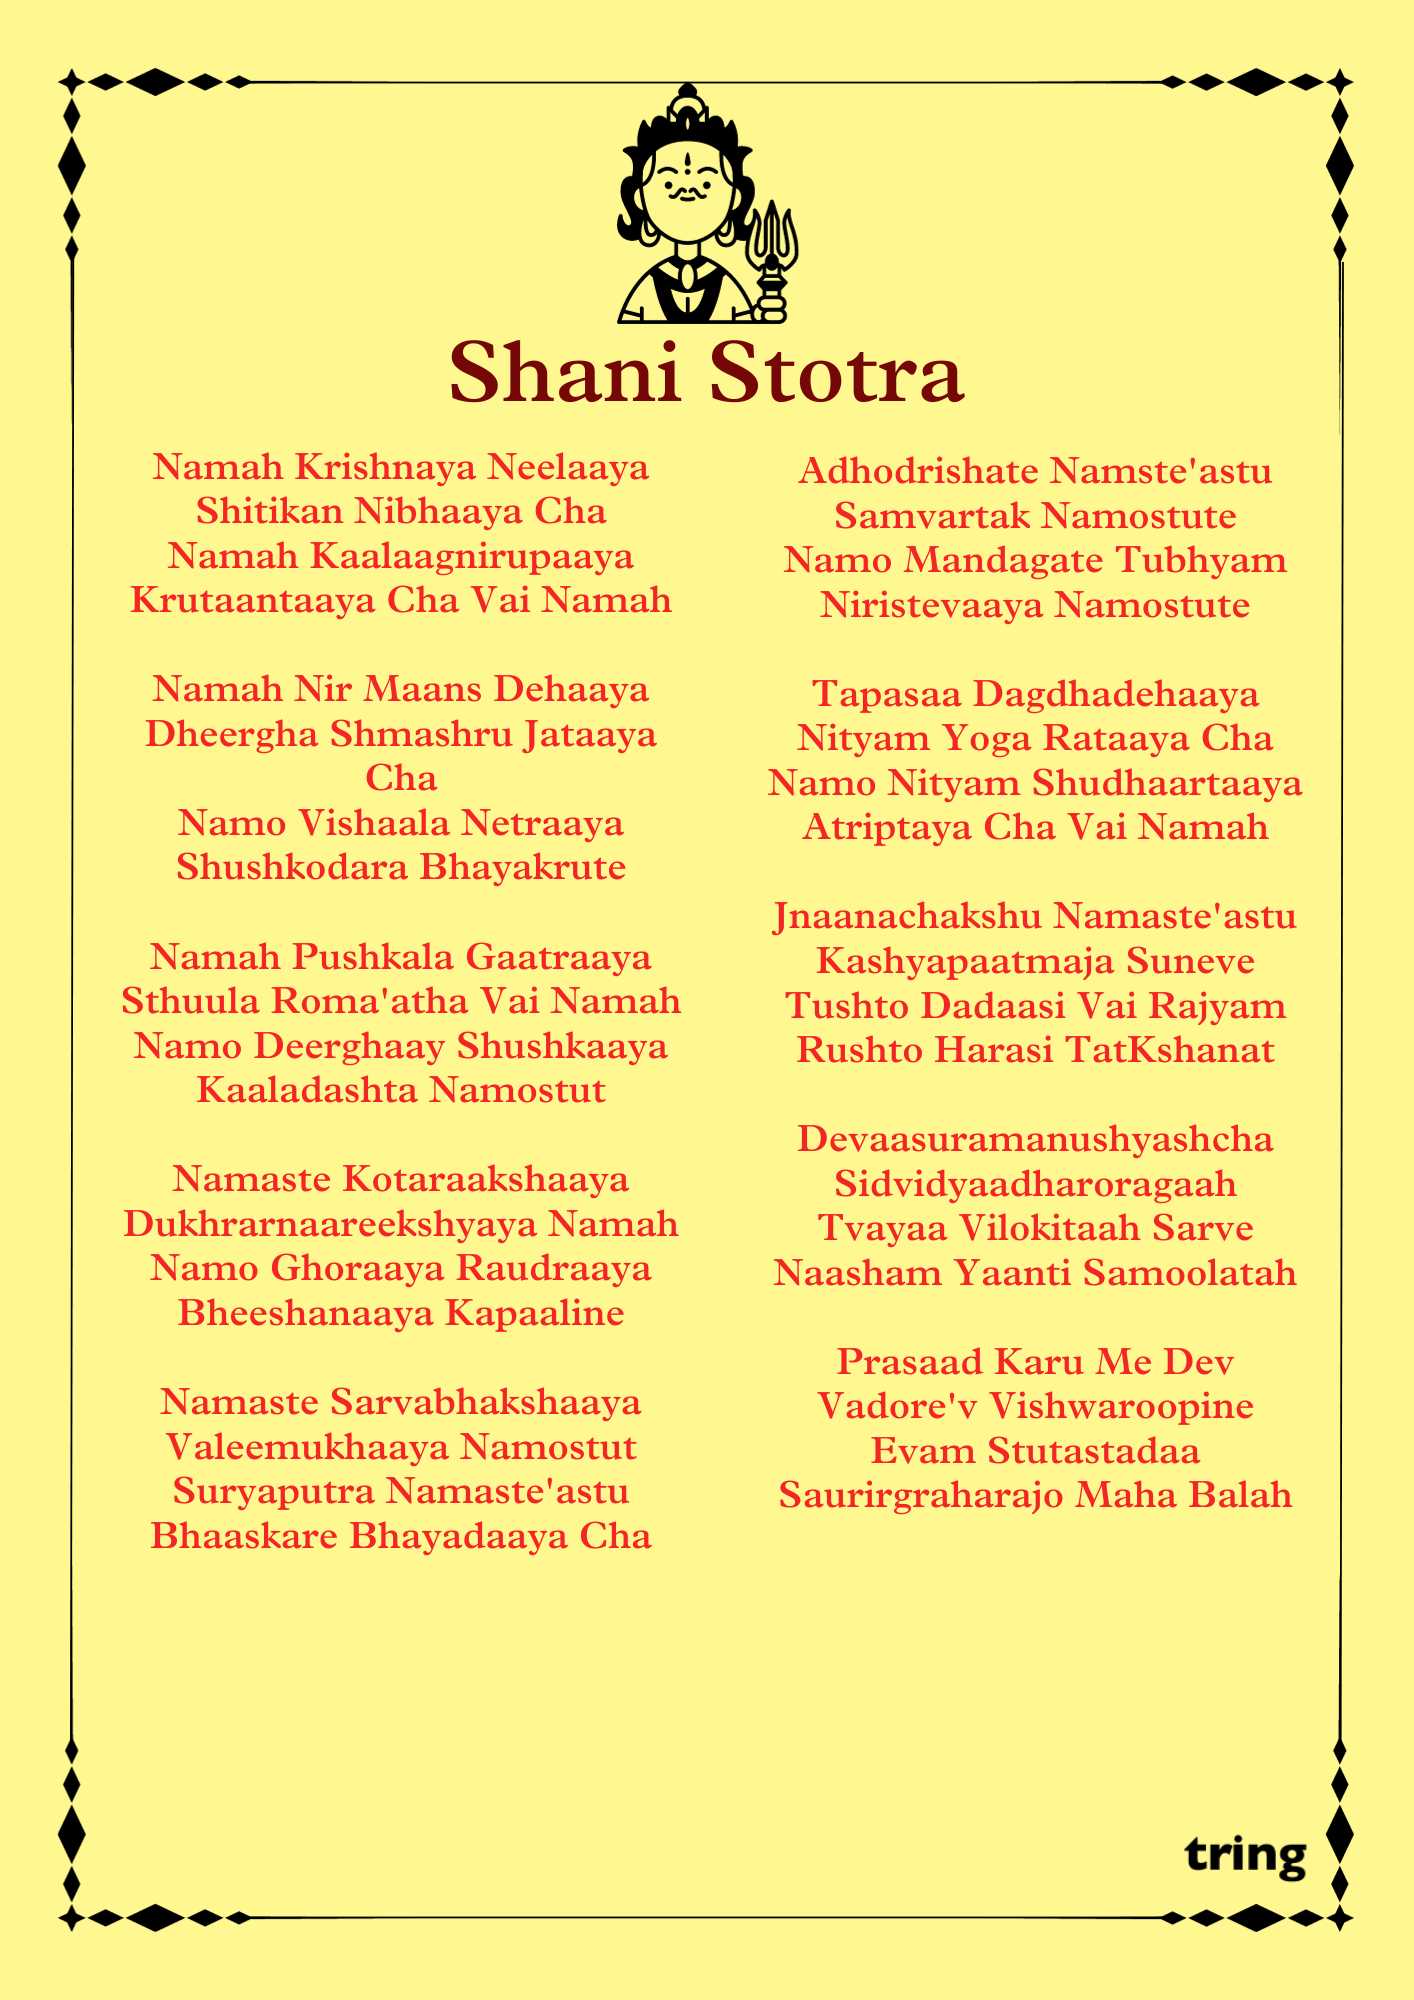 Shani Stotra Images (1)